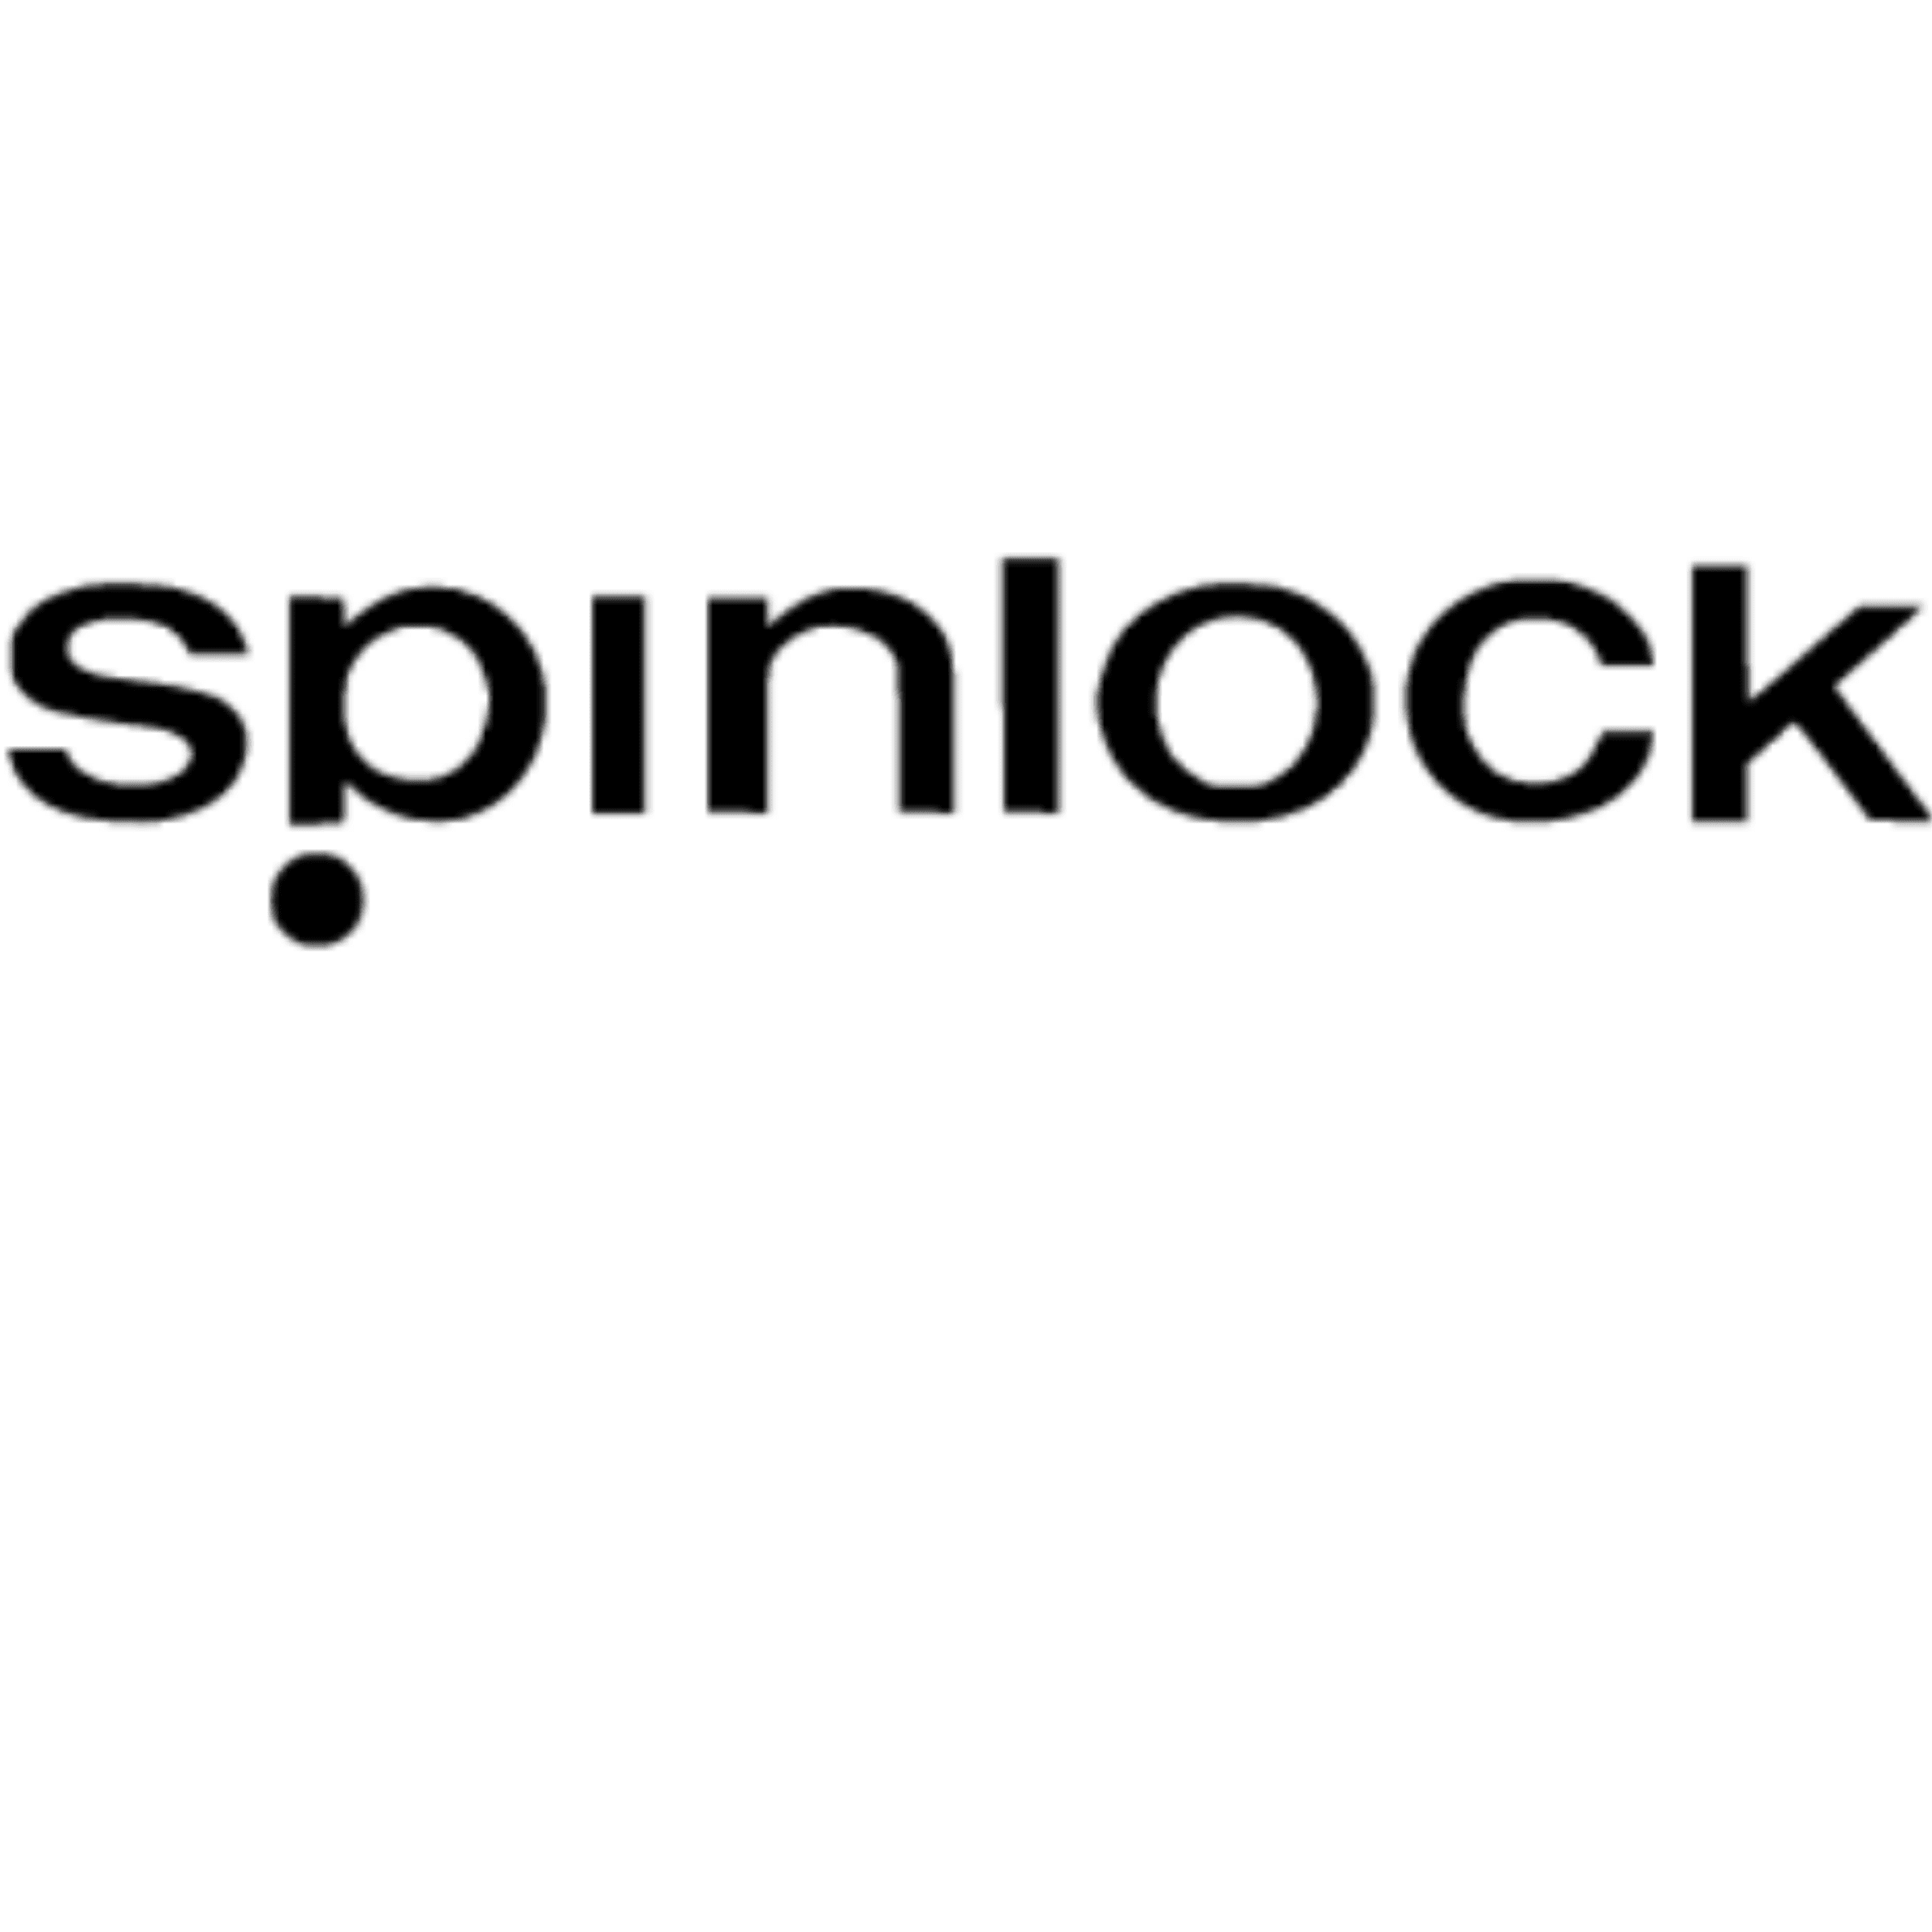 Spinlock logo